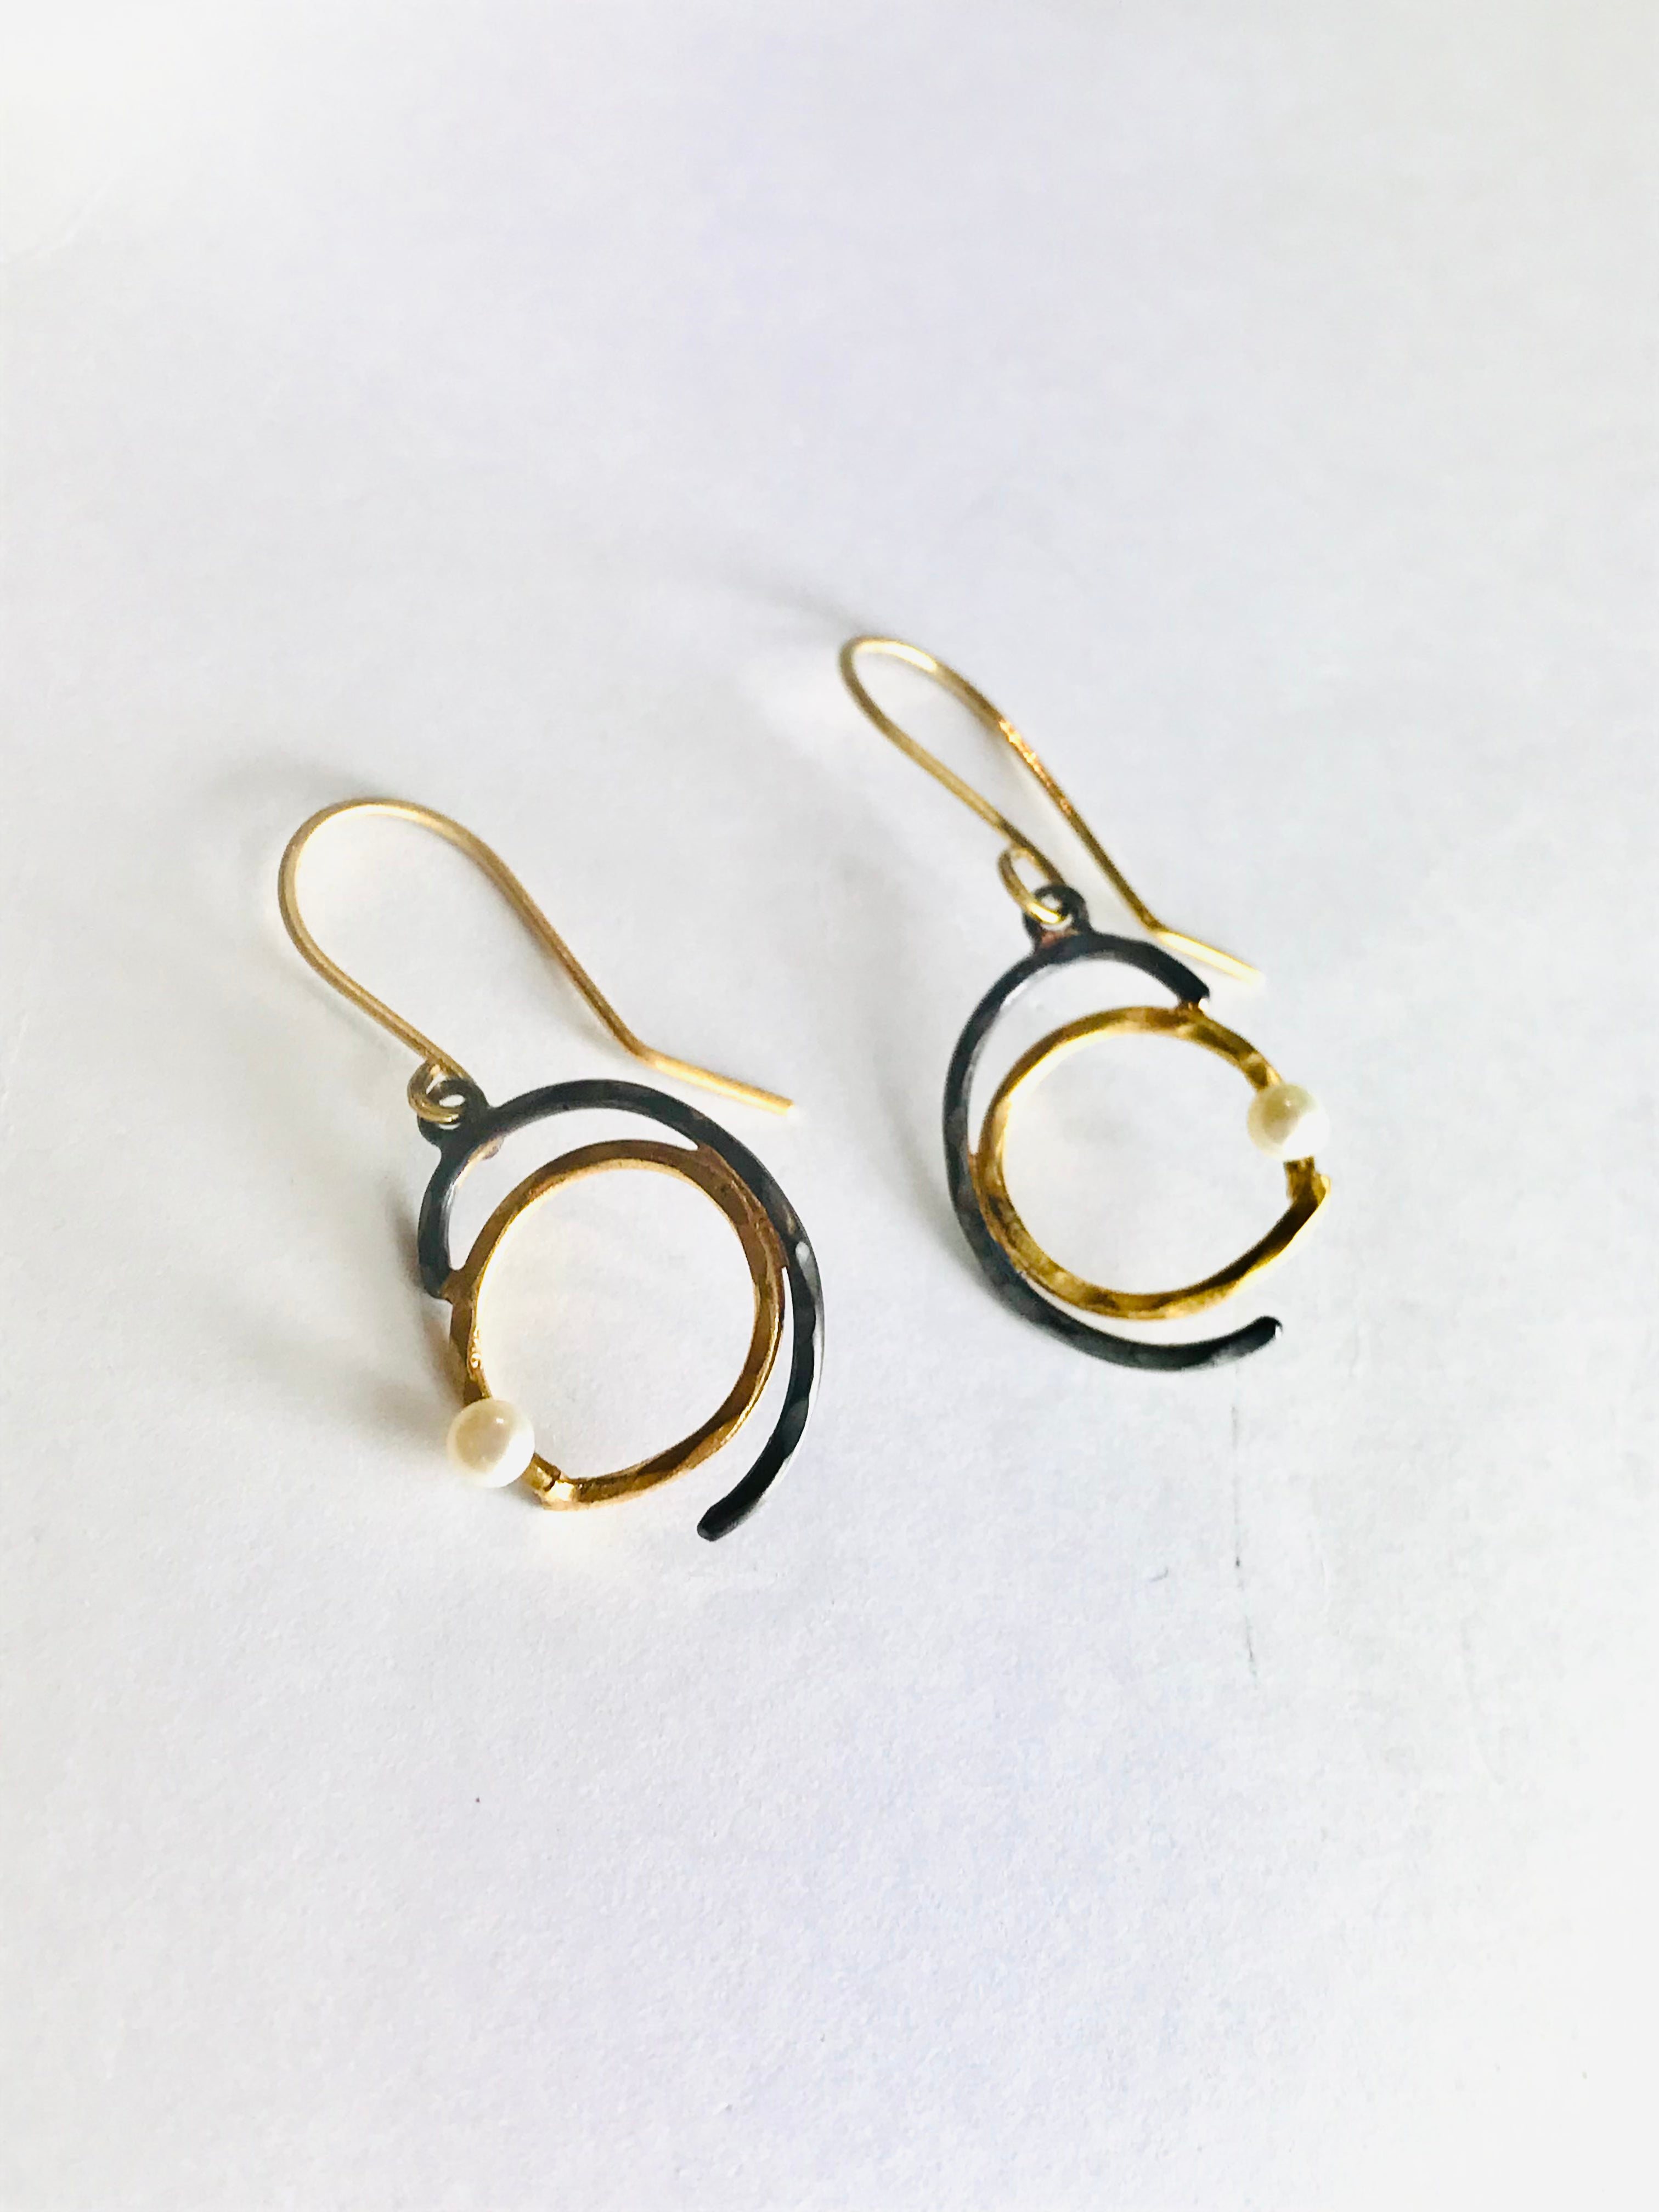 Pearl Hoop Drop Earrings - The Nancy Smillie Shop - Art, Jewellery & Designer Gifts Glasgow